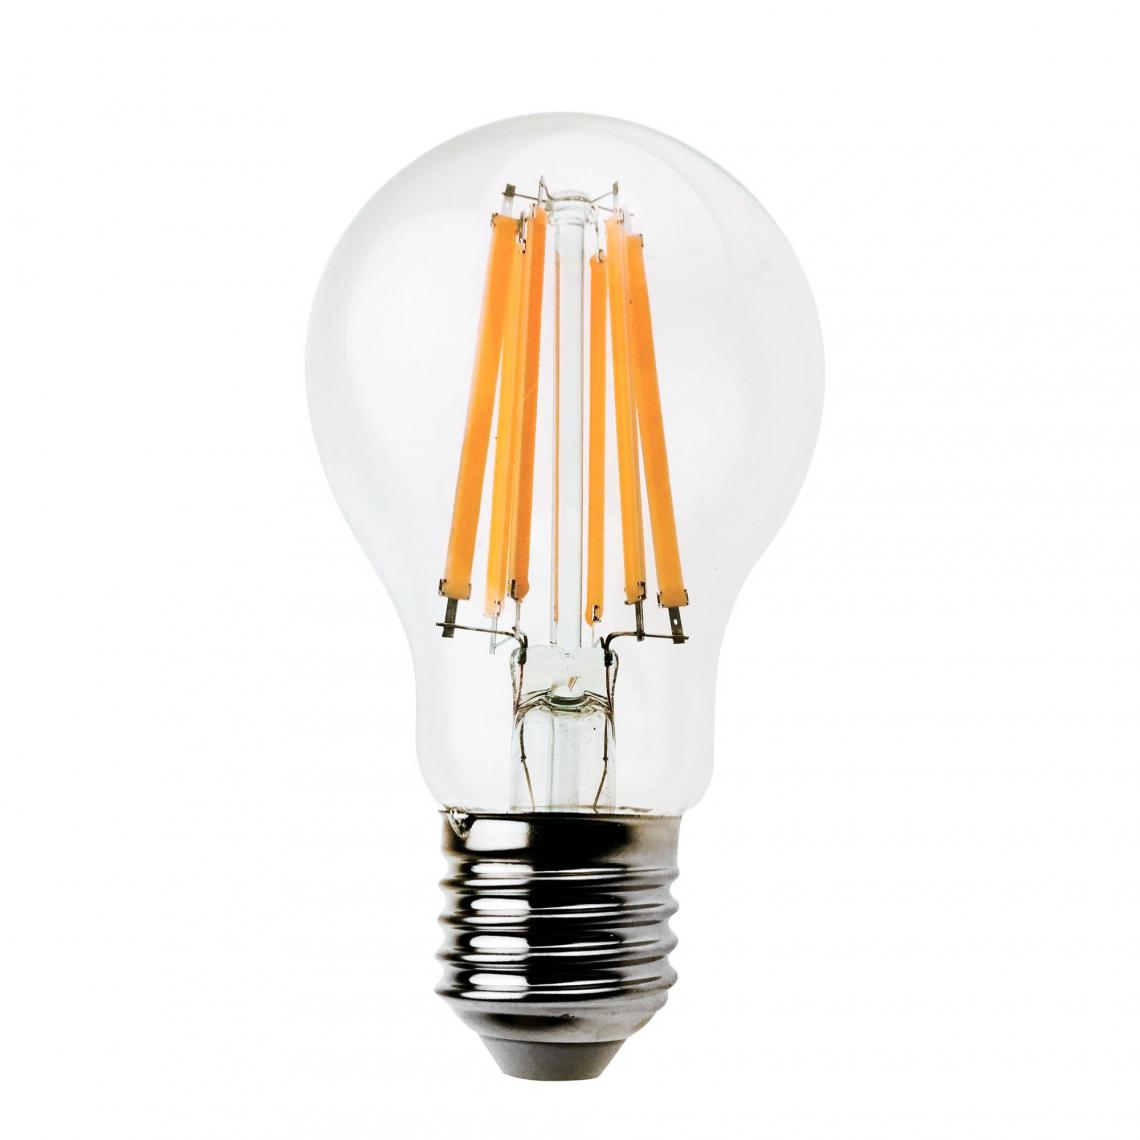 Velamp - Ampoule LED SMD, spot GU10, 230V, 6W / 470lm, 3000K, 120 ° - Ampoules LED